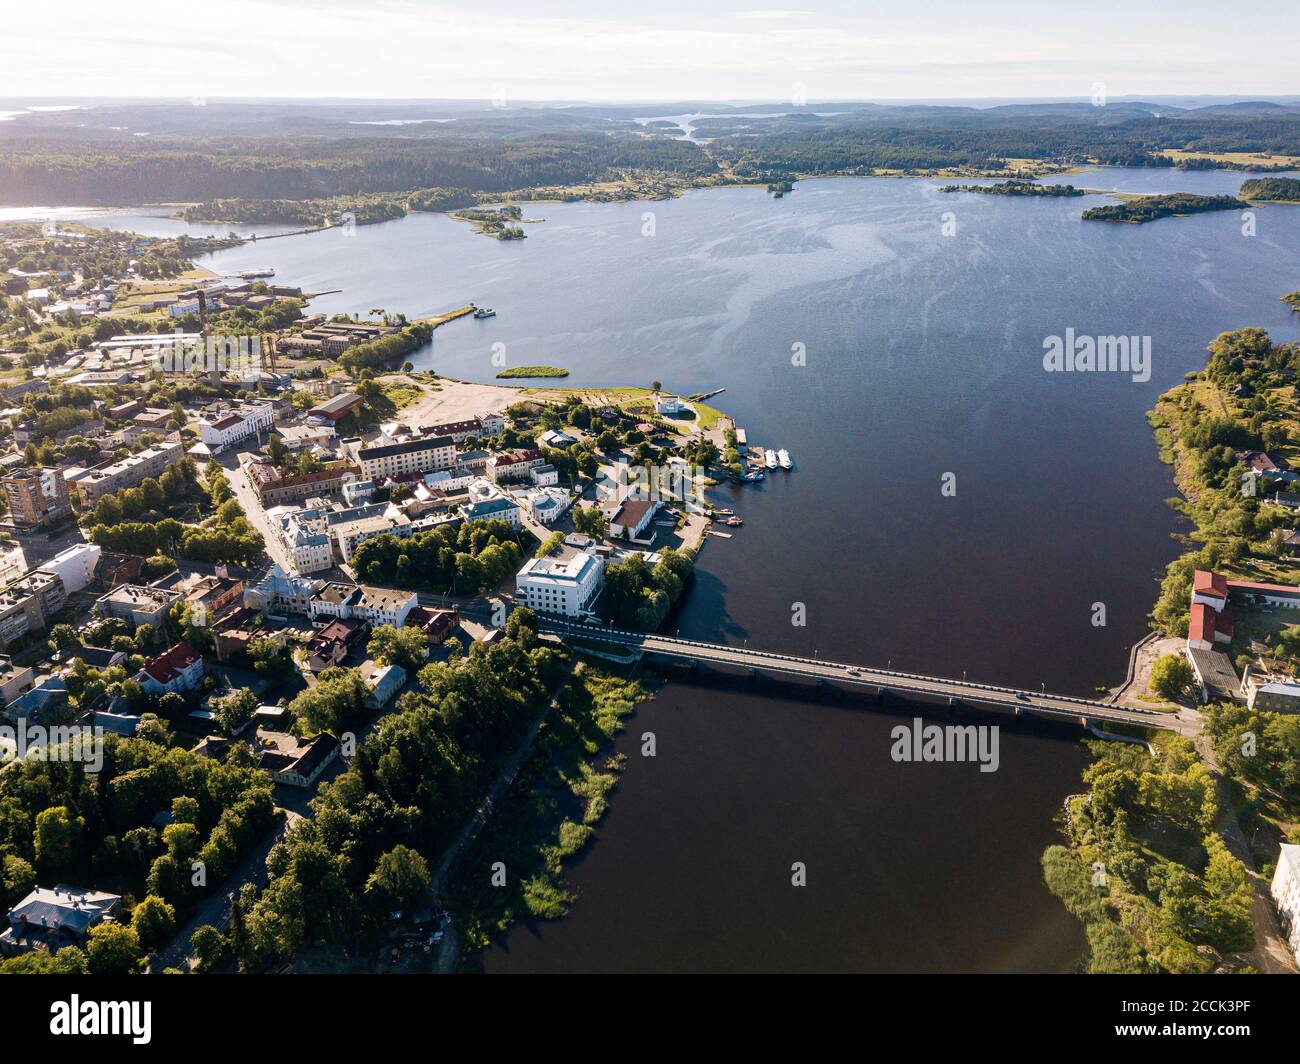 Russia, Republic of Karelia, Sortavala, Aerial view of town on shore of Lake Ladoga Stock Photo